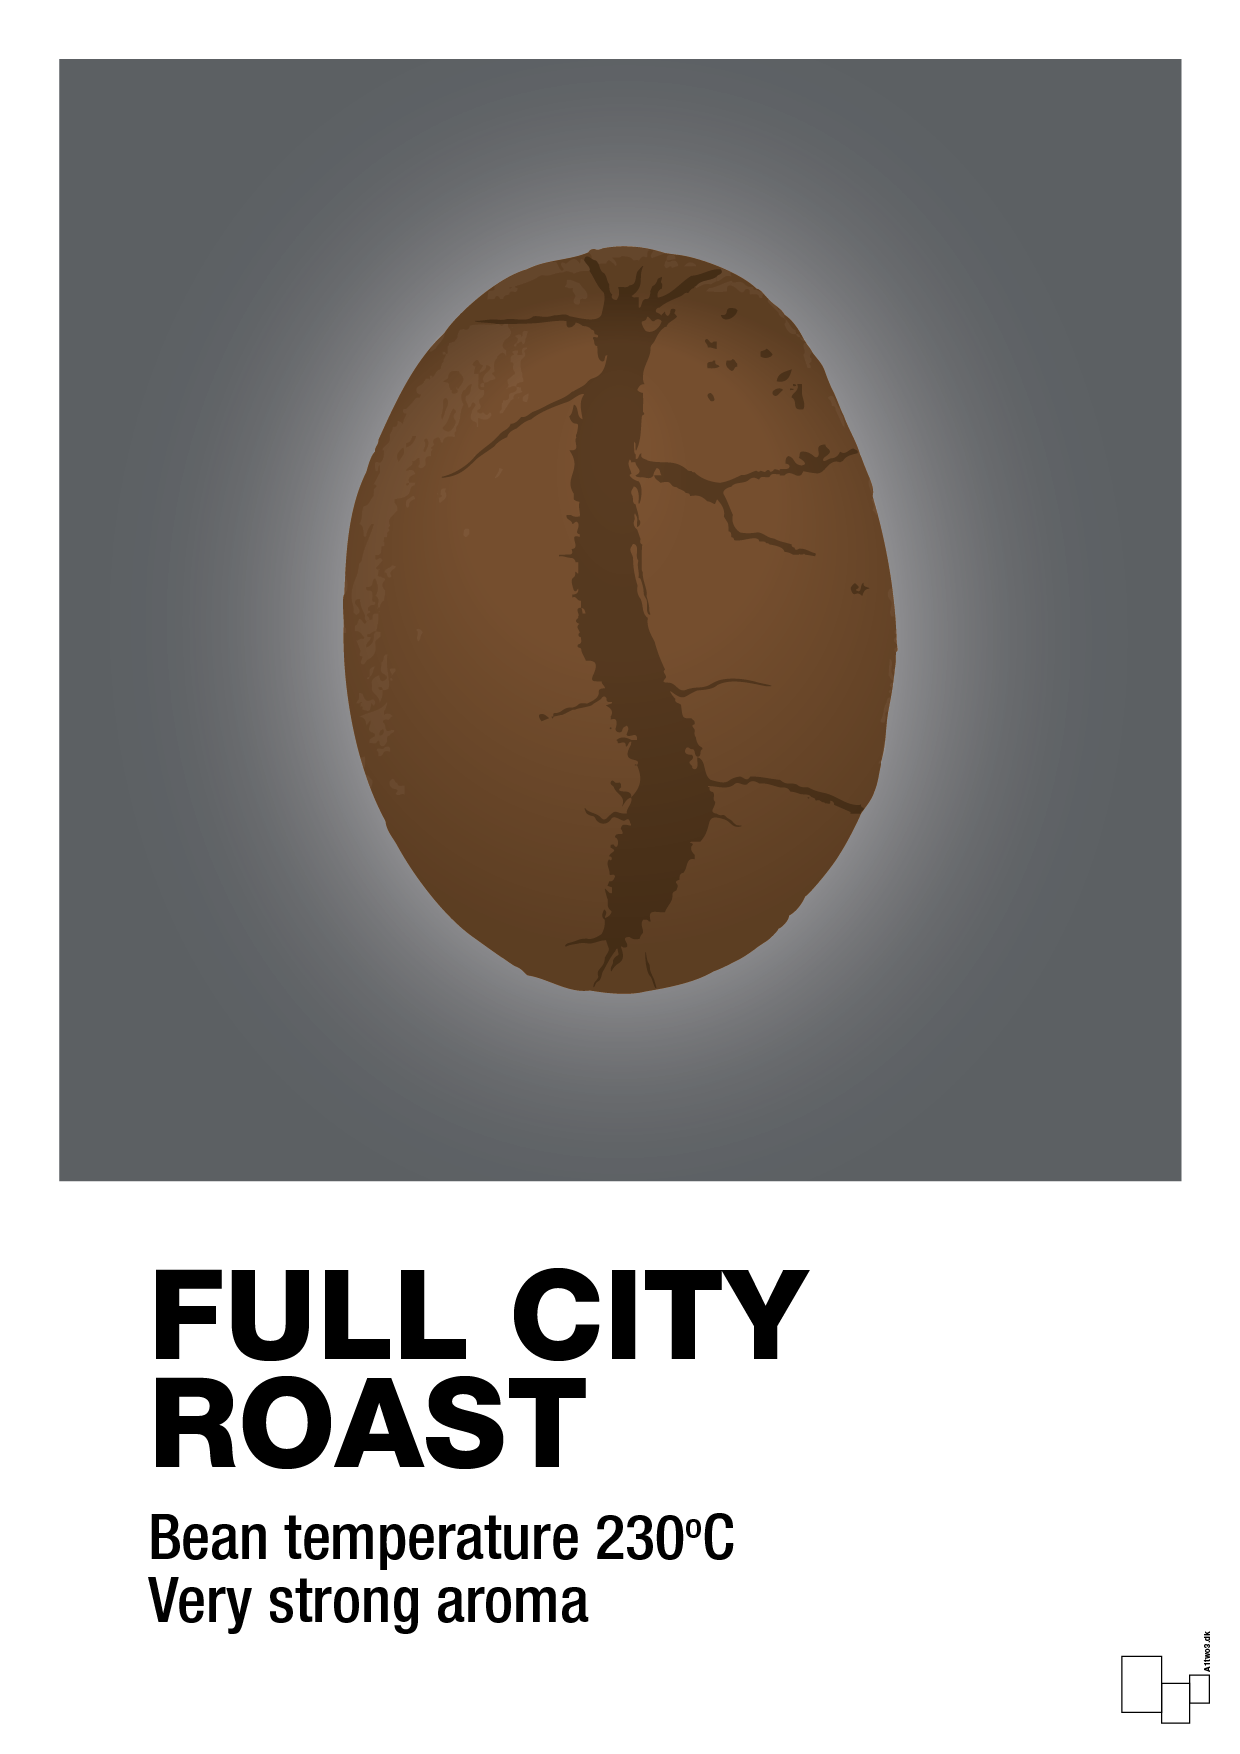 full city roast - Plakat med Mad & Drikke i Graphic Charcoal